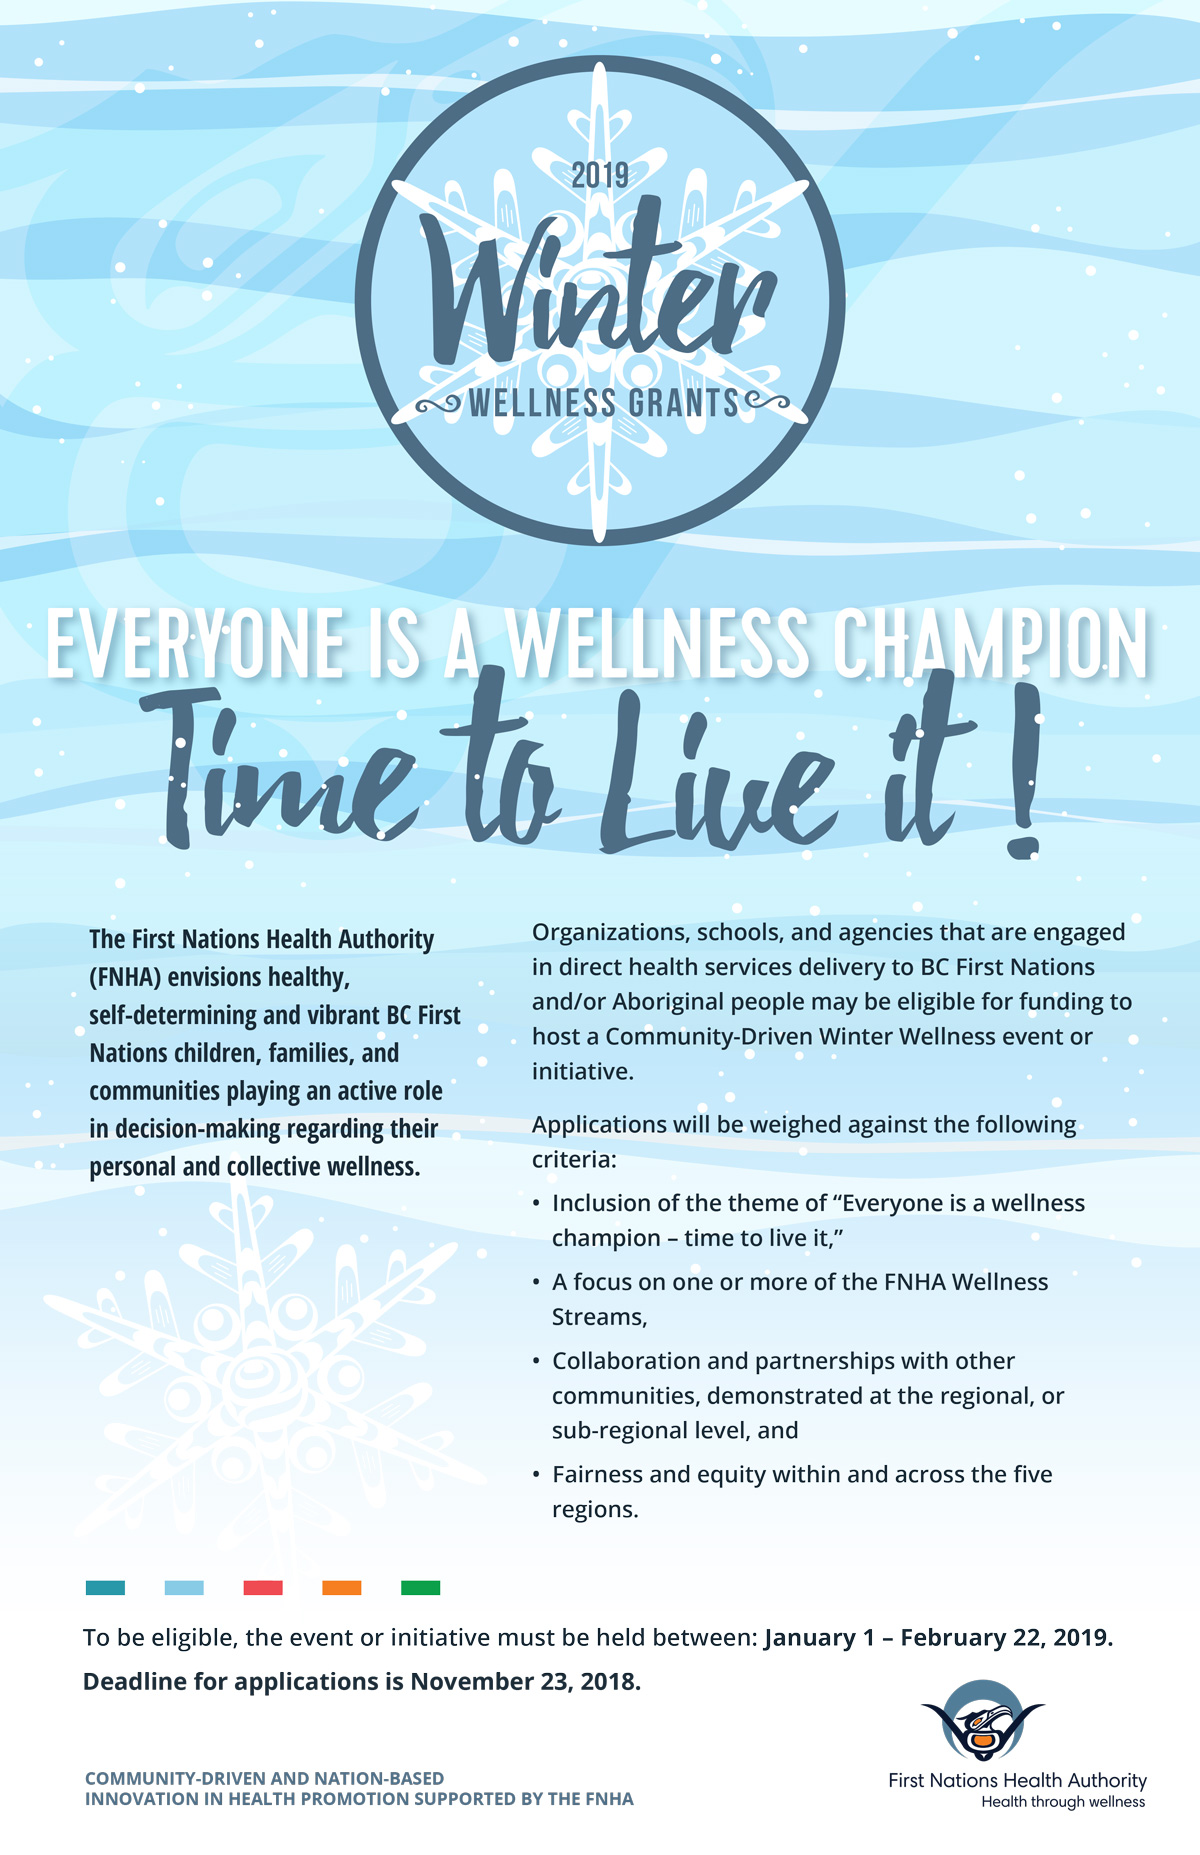 FNHA-2019-Winter-Wellness-Grants-Poster.jpg